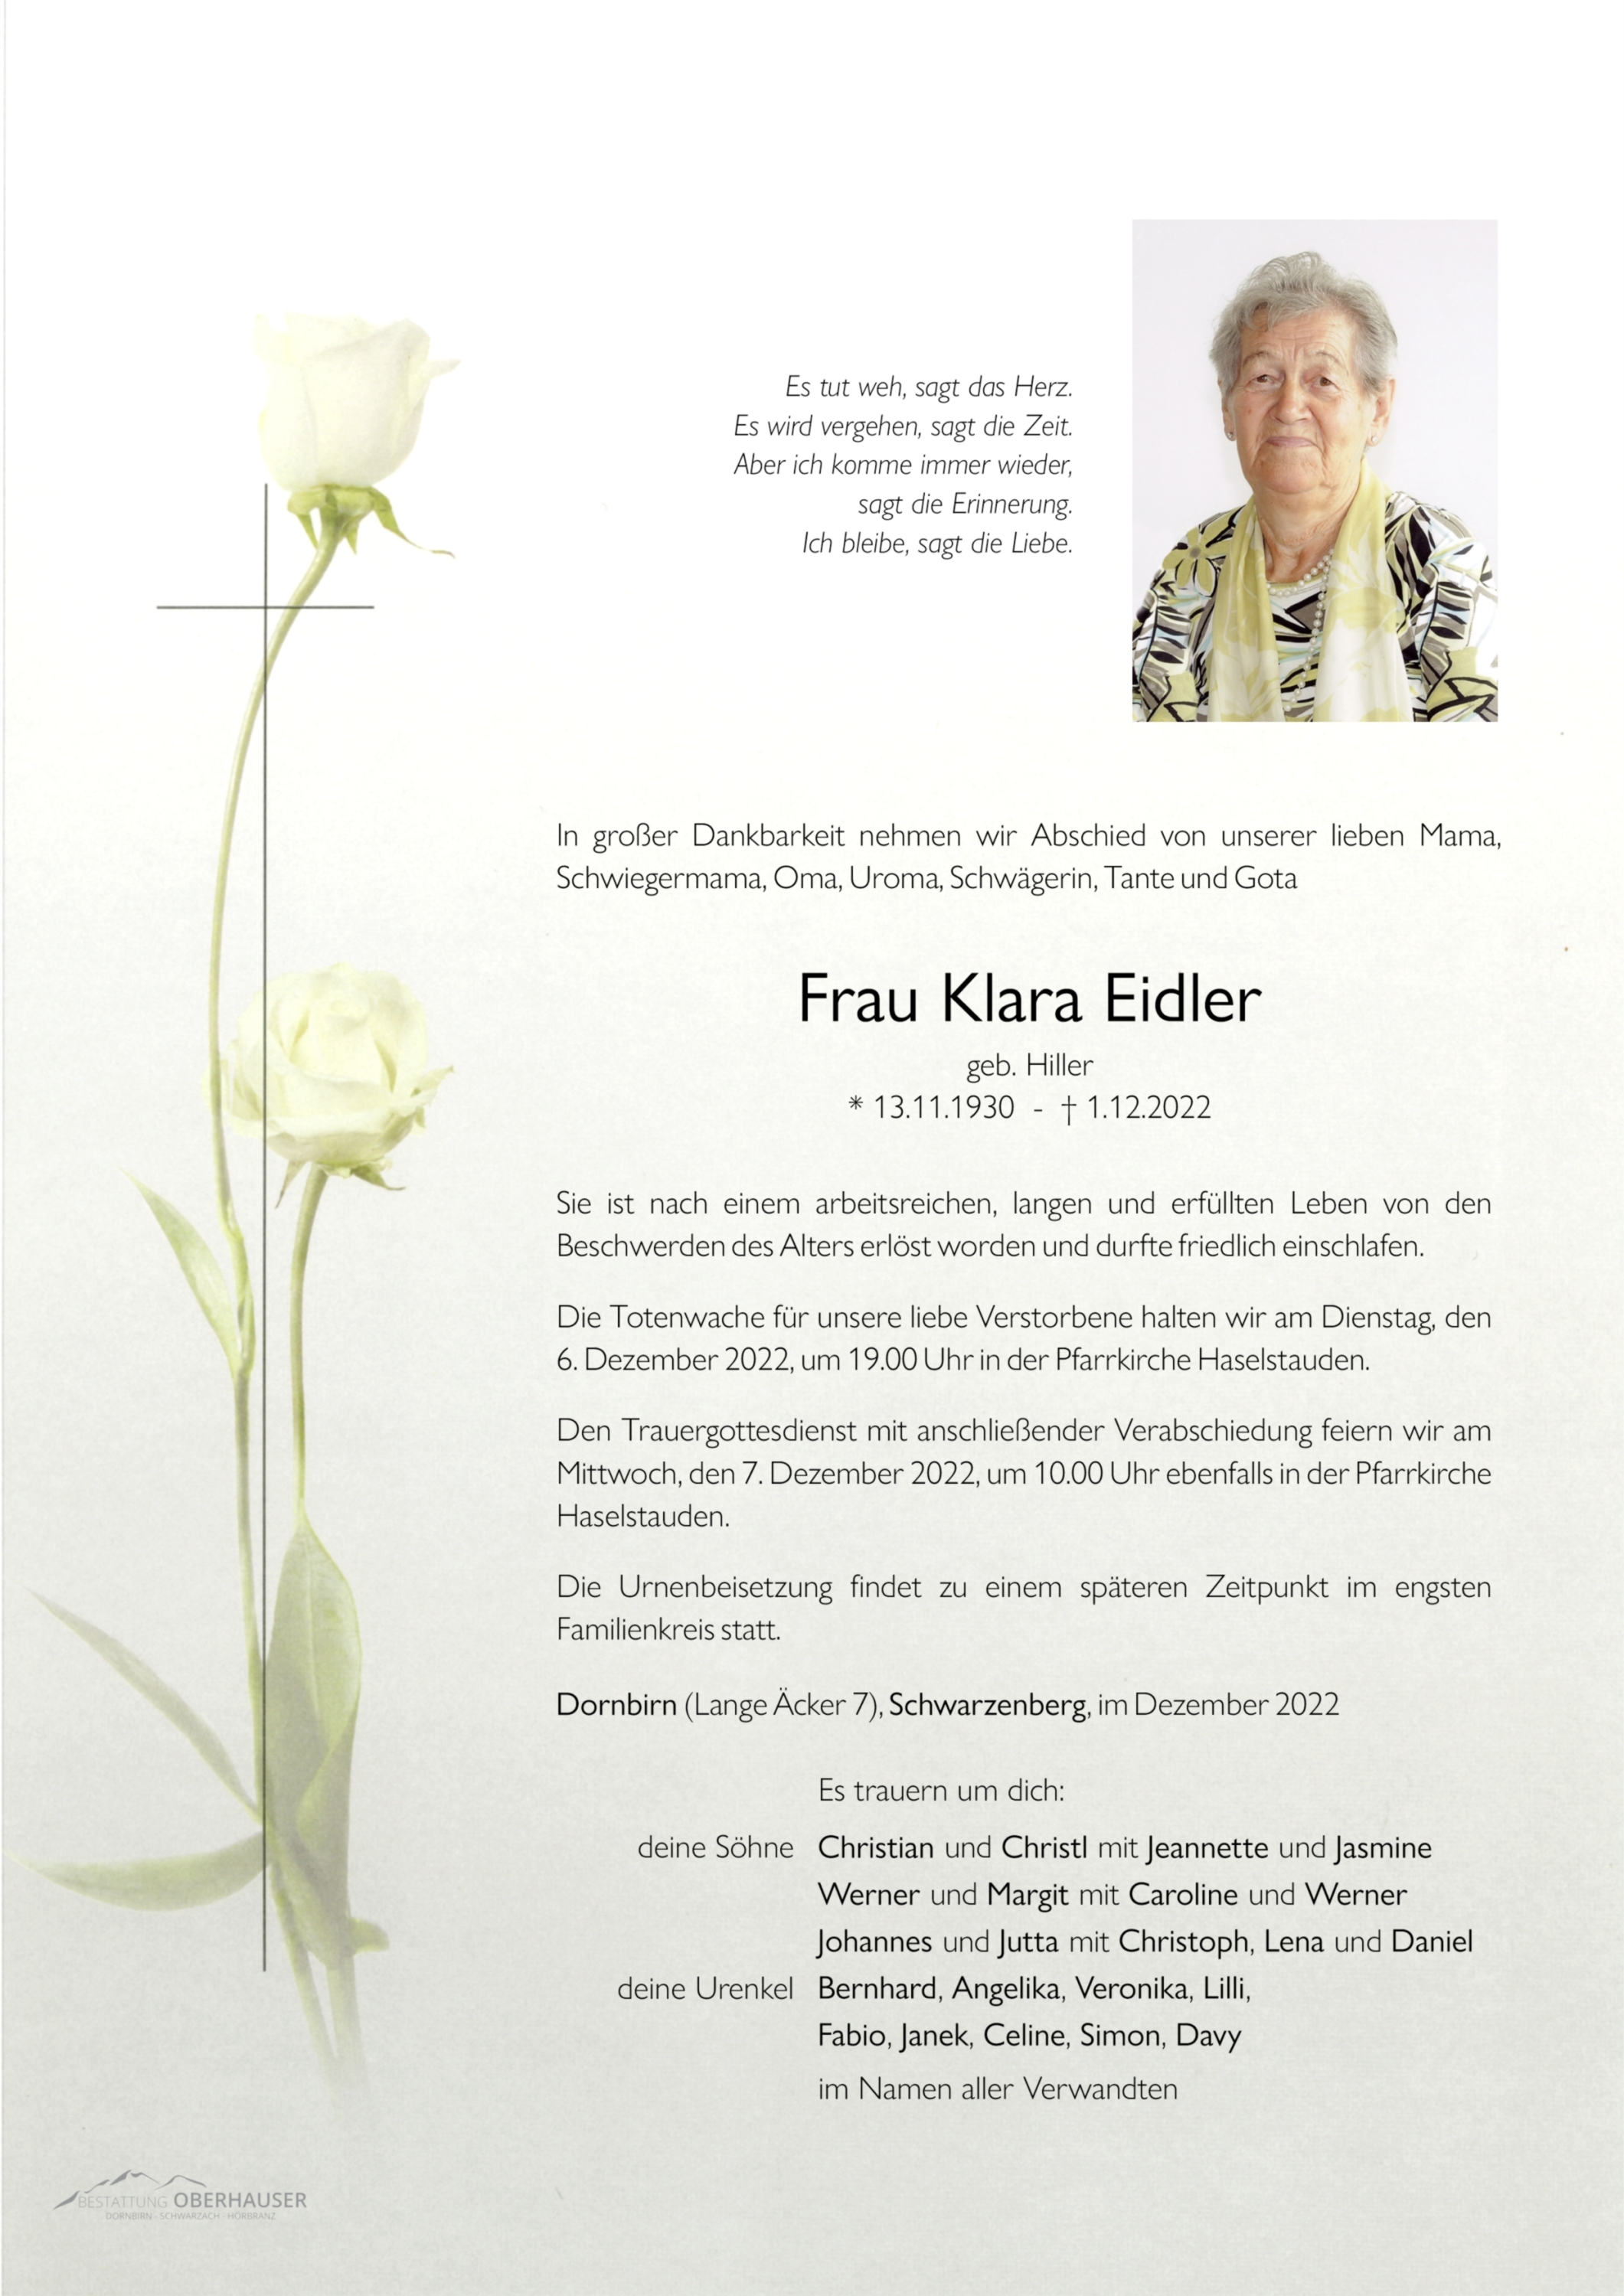 Klara Eidler